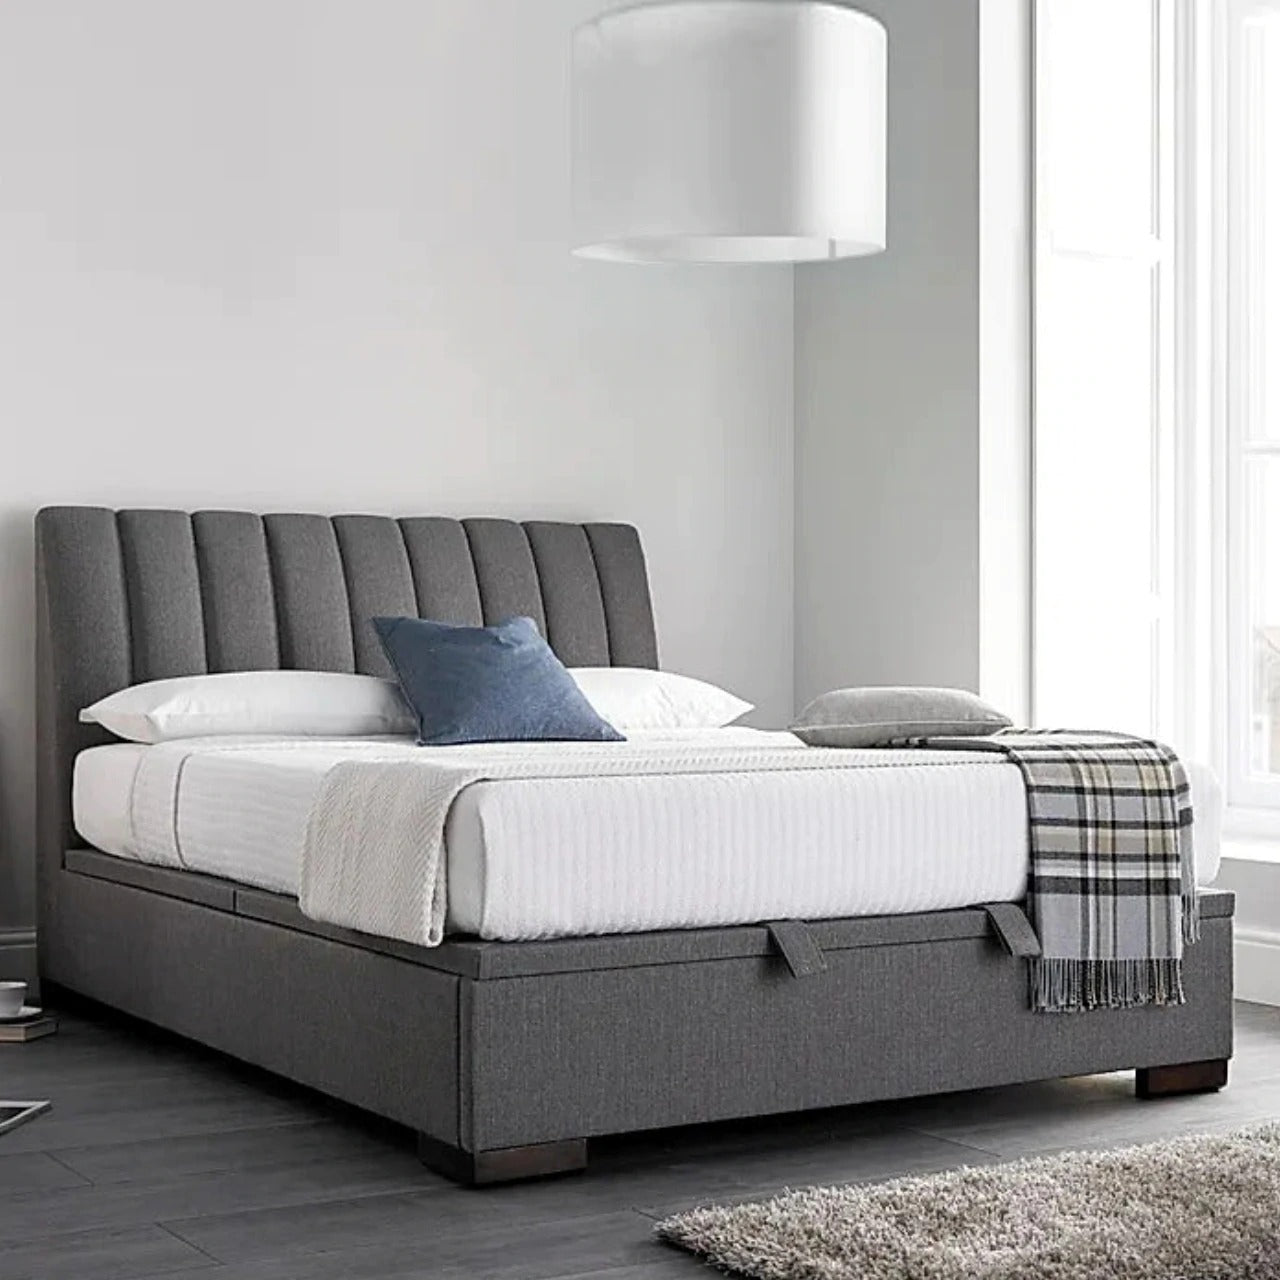 Hydraulic Beds, Hydraulic Storage Bed, King Size Bed With Hydraulic Storage, Hydraulic Bed Price